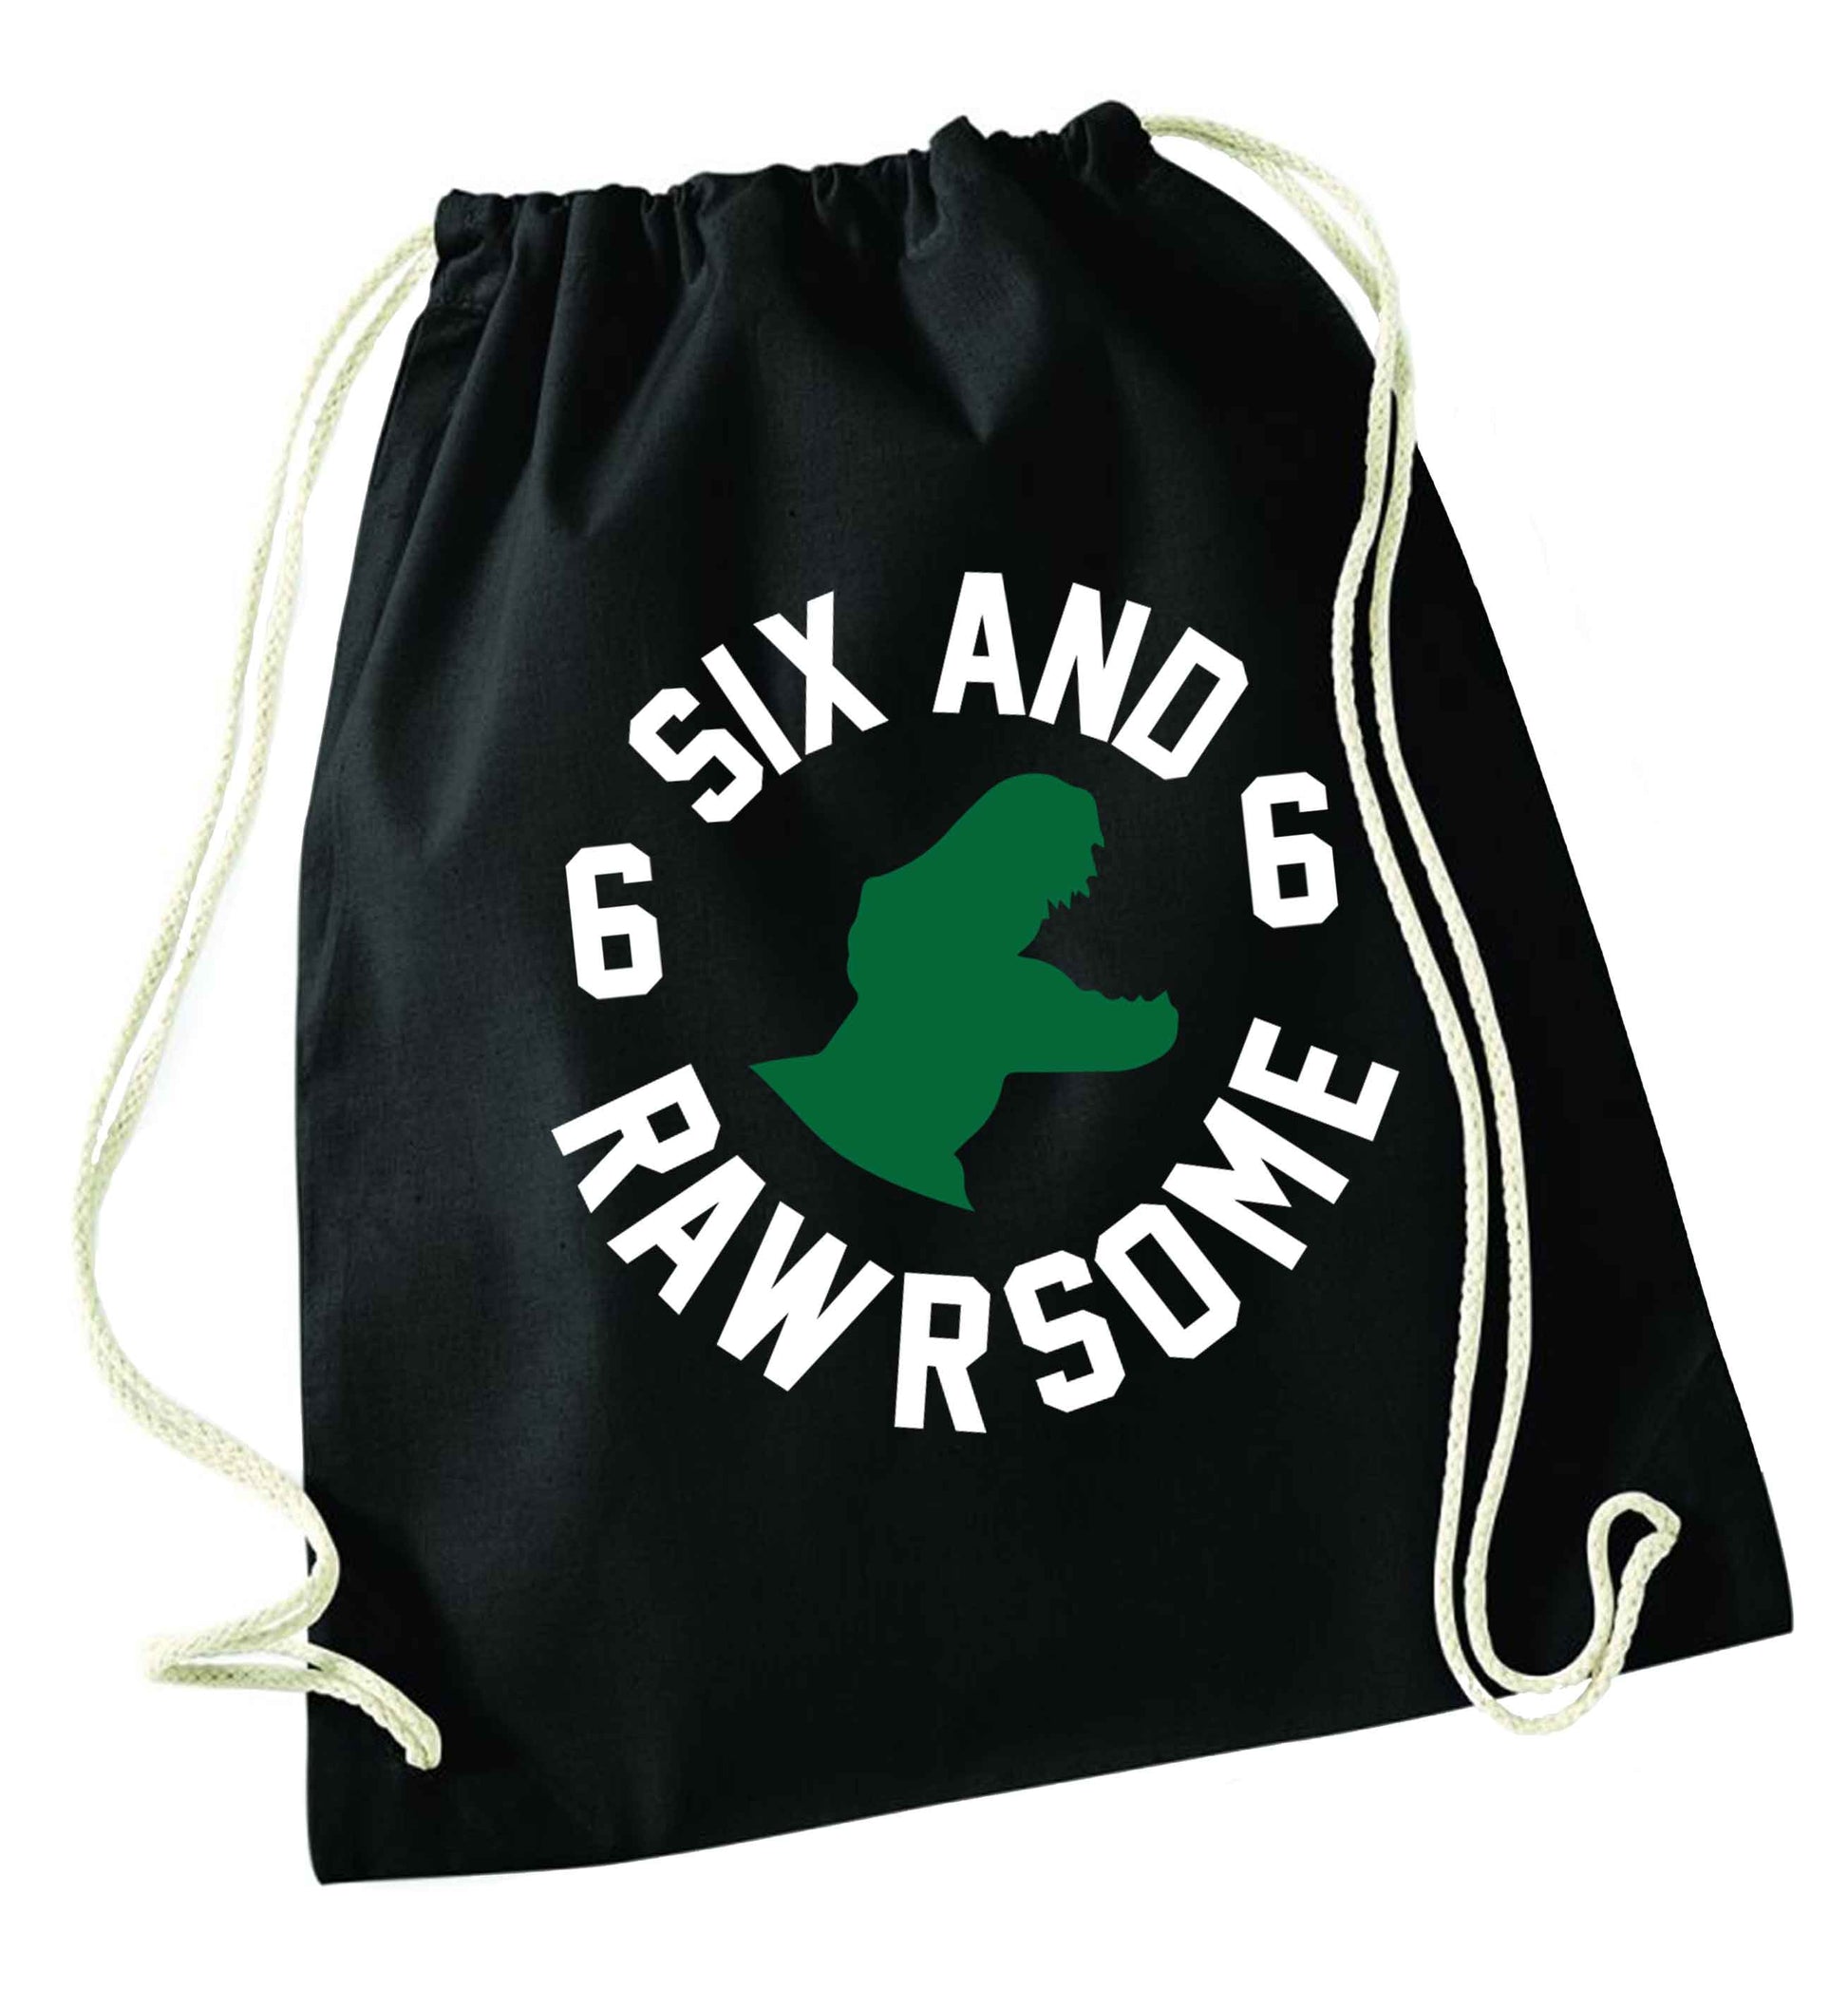 Six and rawrsome black drawstring bag